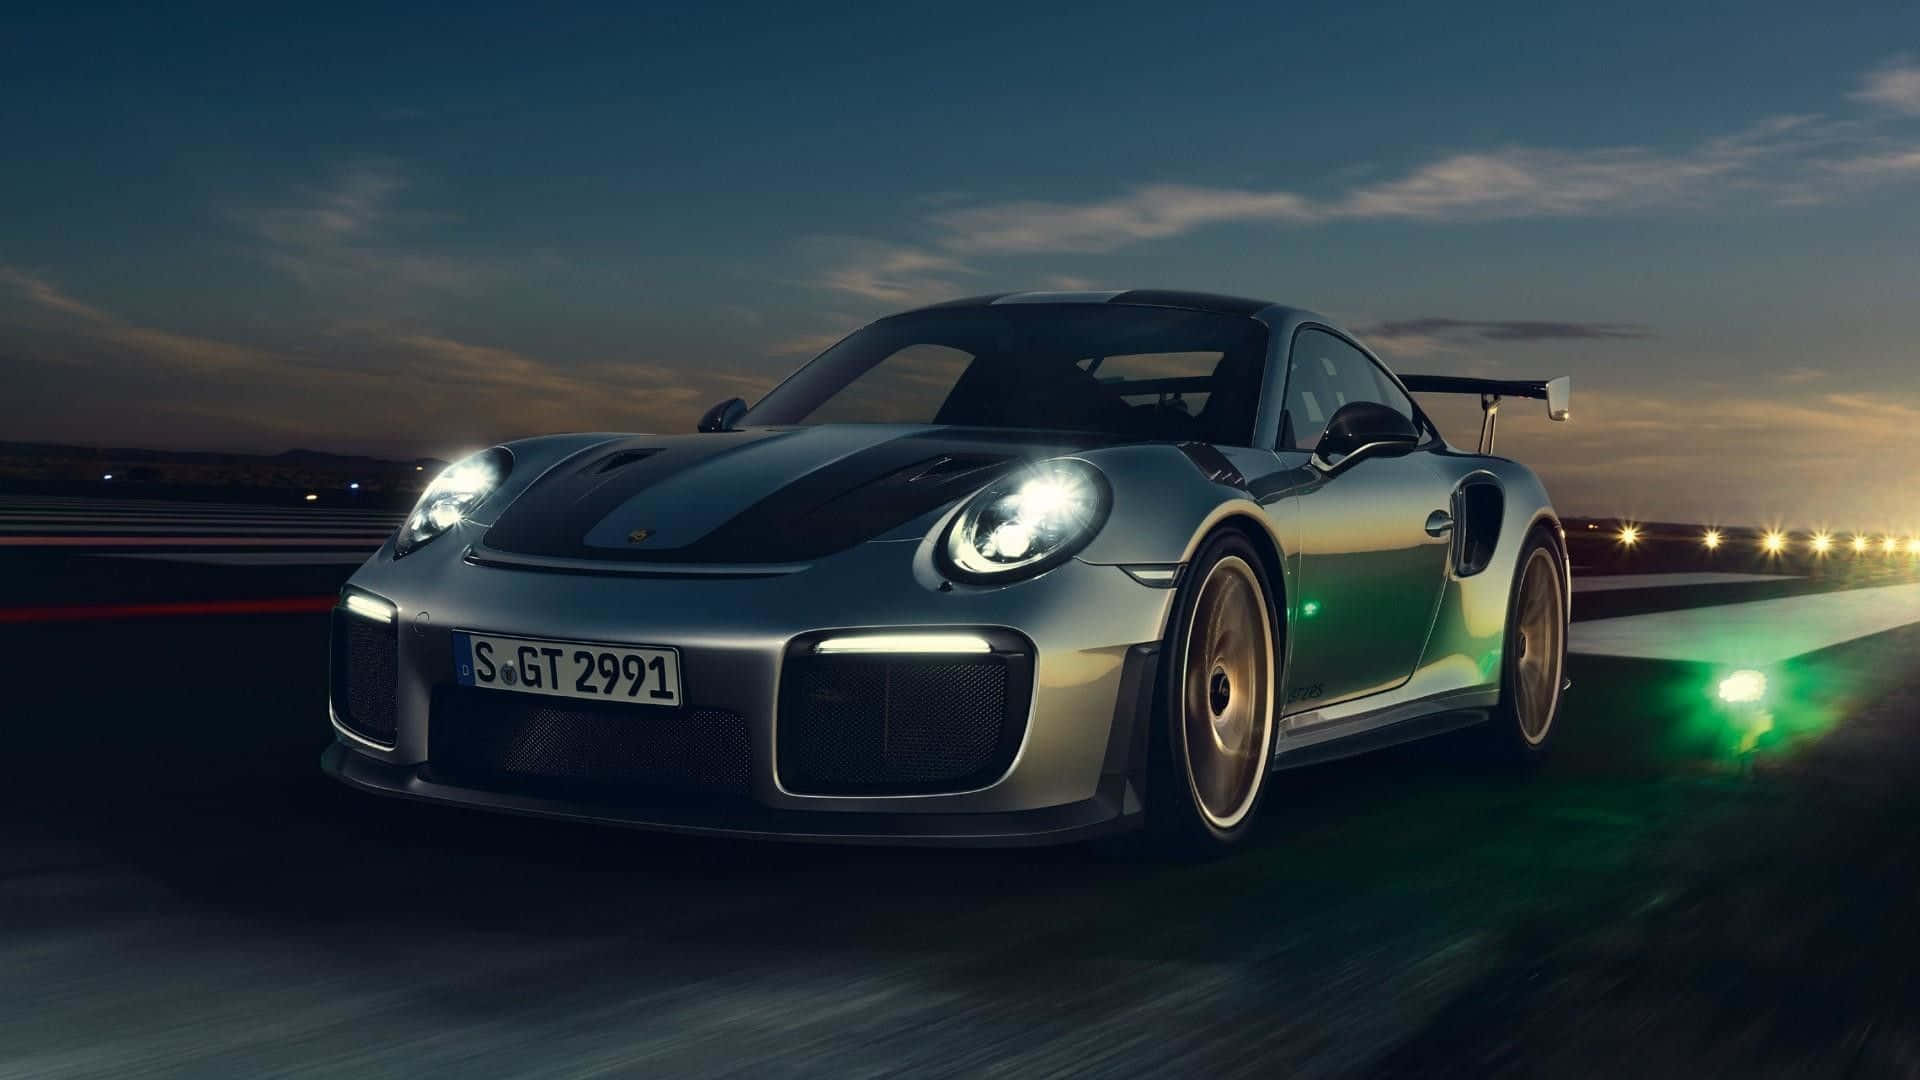 Sleek Porsche 911 on the Prowling Streets